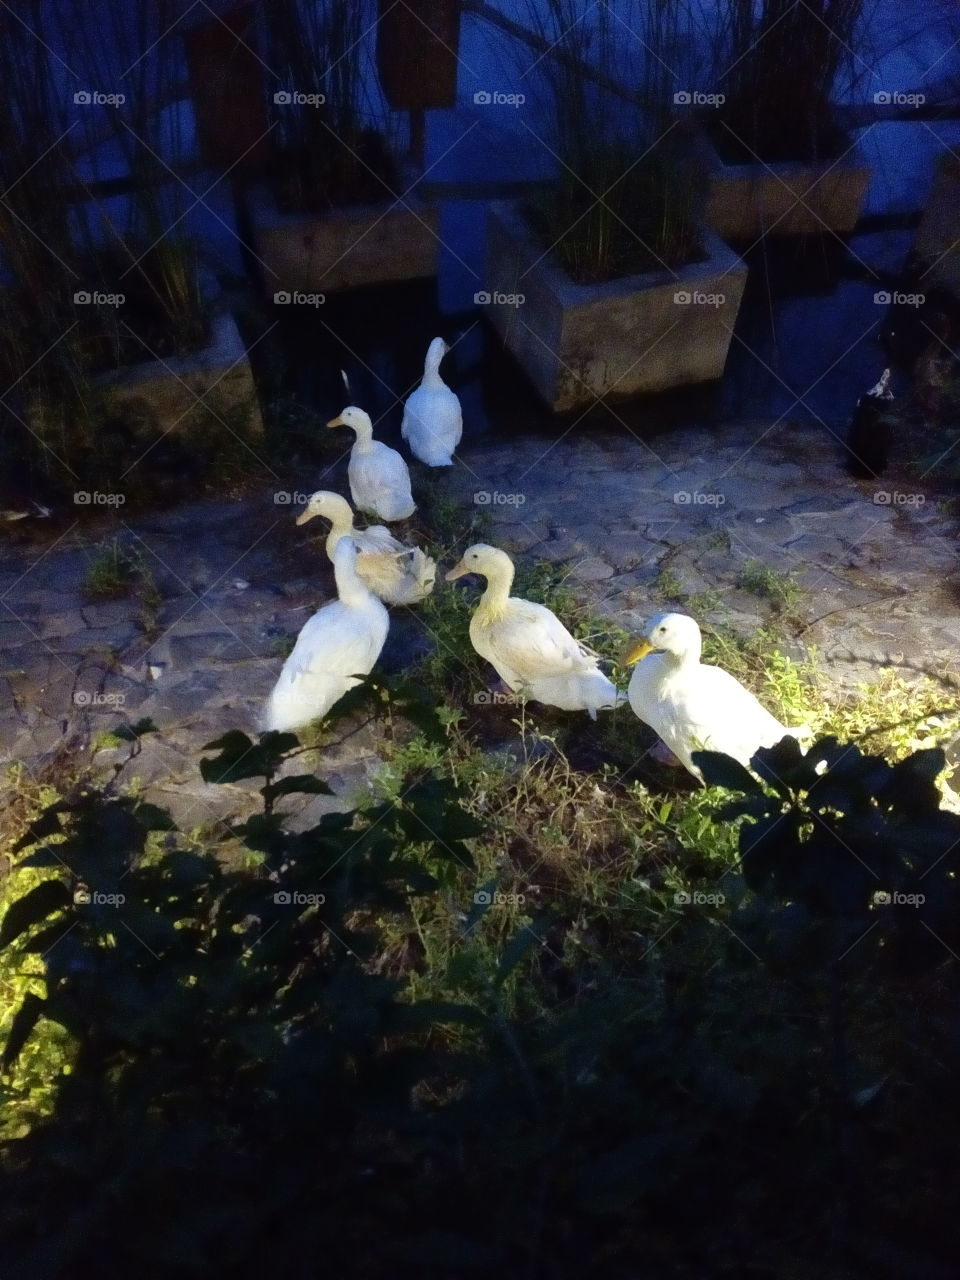 Ducks in the night